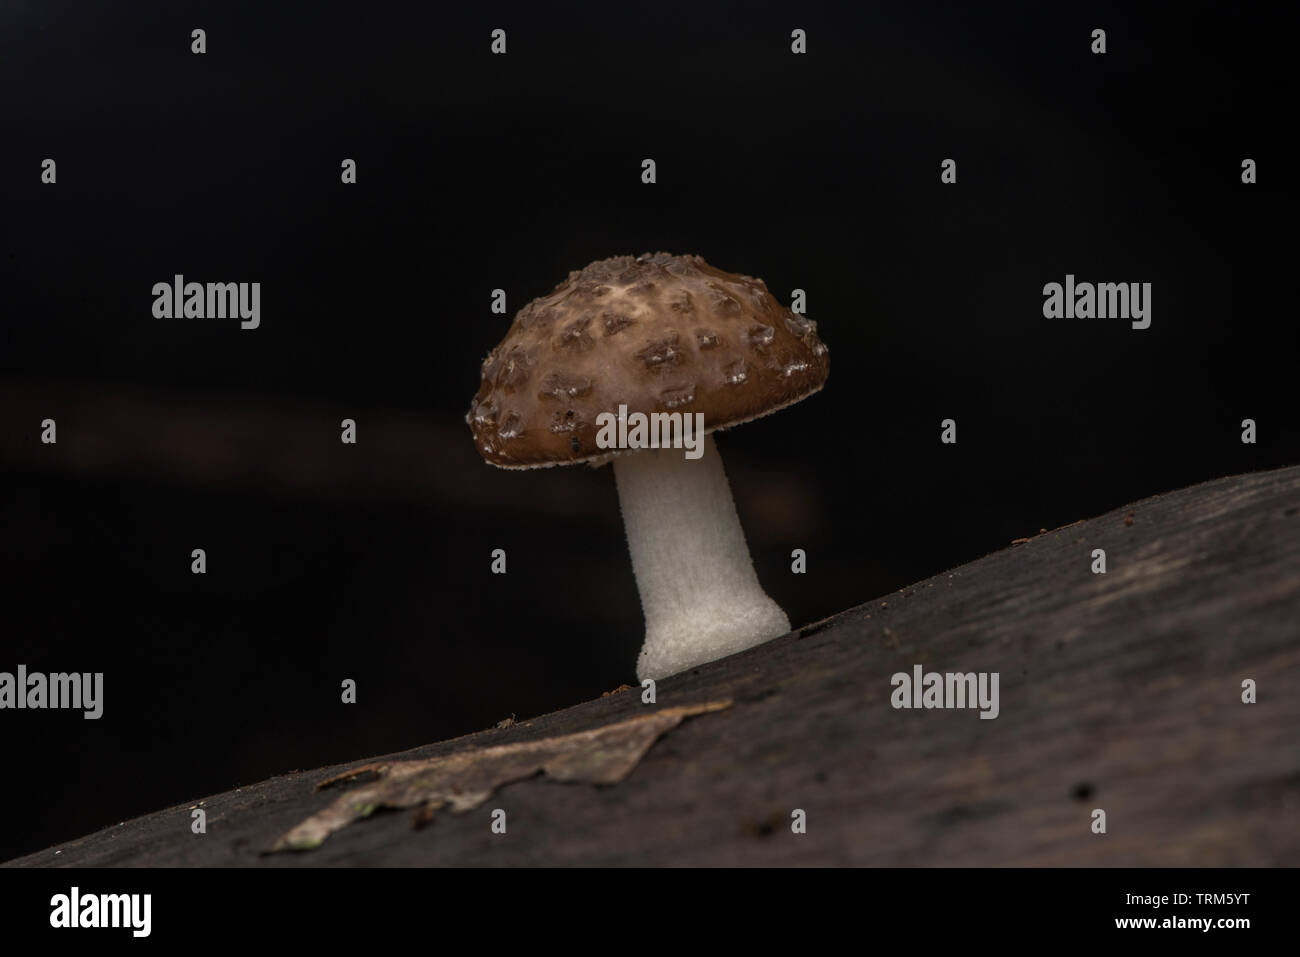 A small mushroom grows on the forest floor in Yasuni national park in Ecuador. Stock Photo